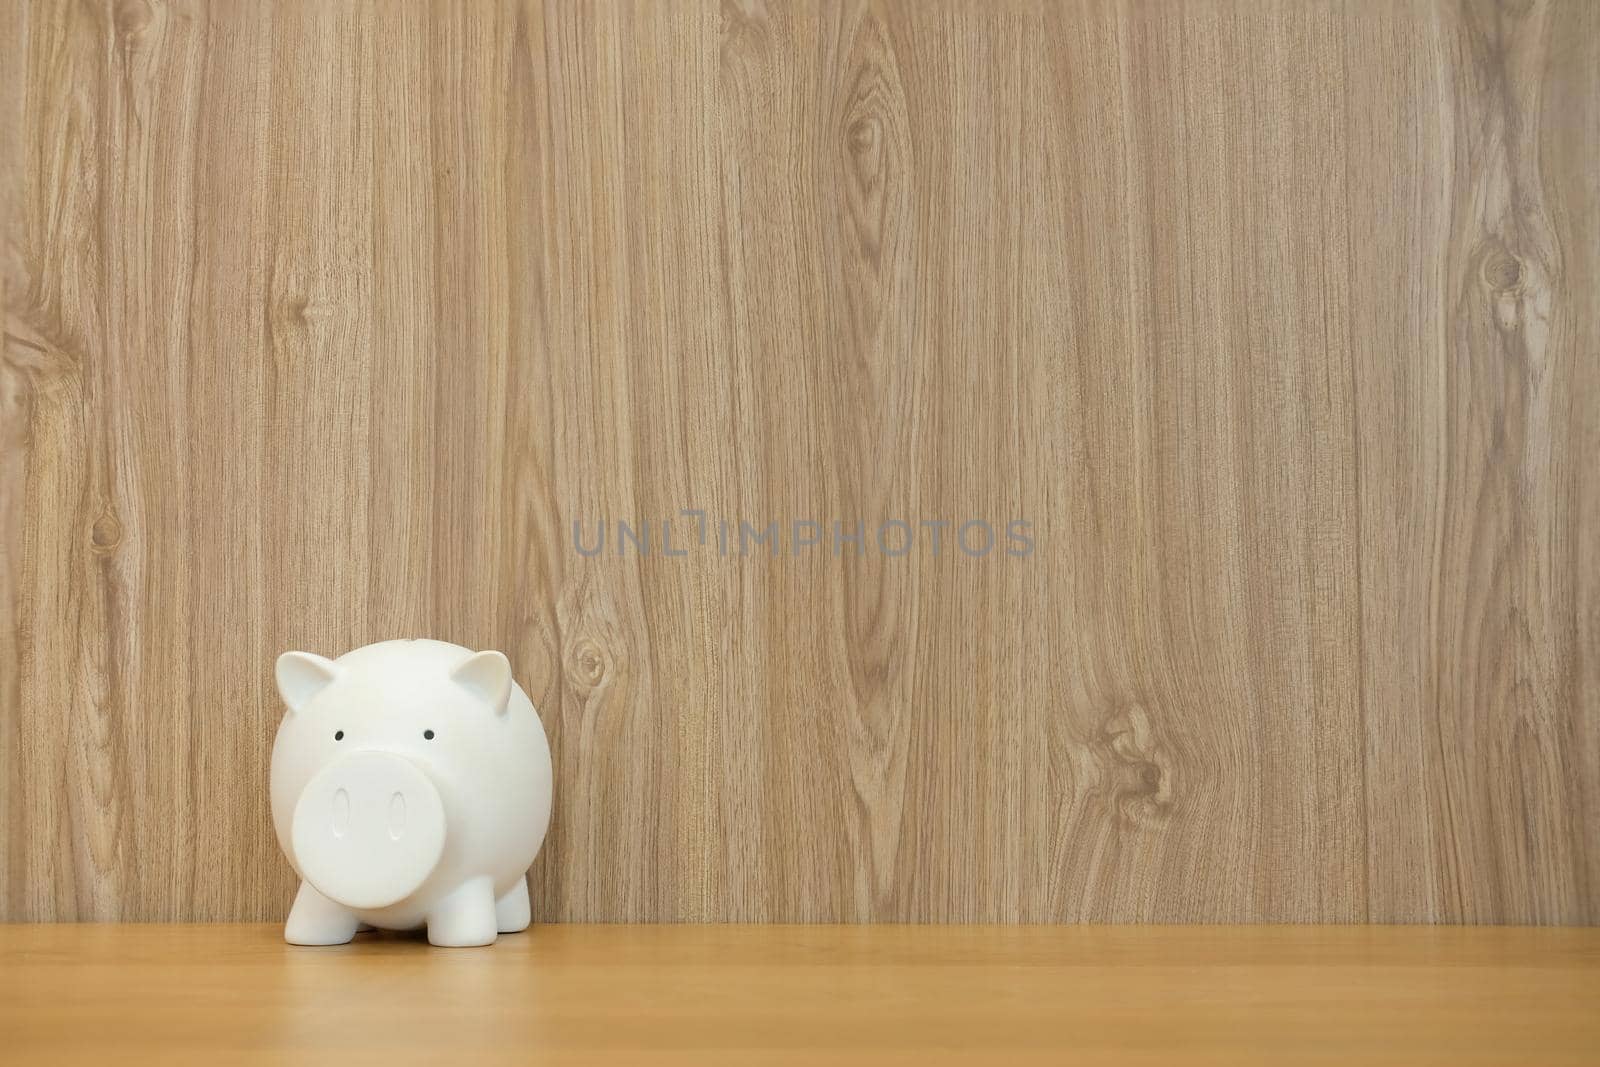 piggy bank on wooden desk. money saving finance investment concept